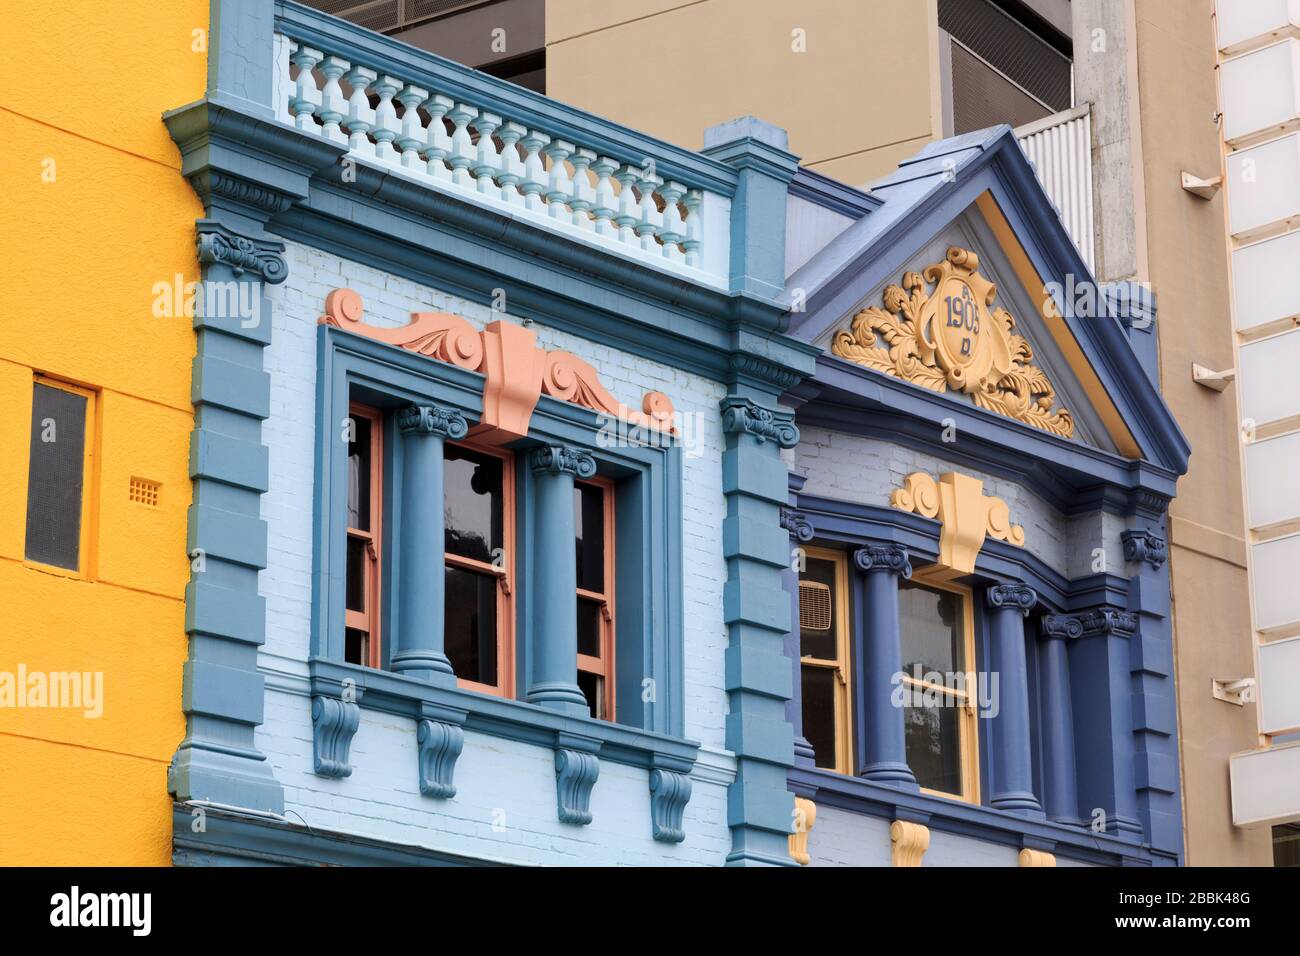 Edifici storici su Collins Street, Hobart, Tasmania, Australia Foto Stock